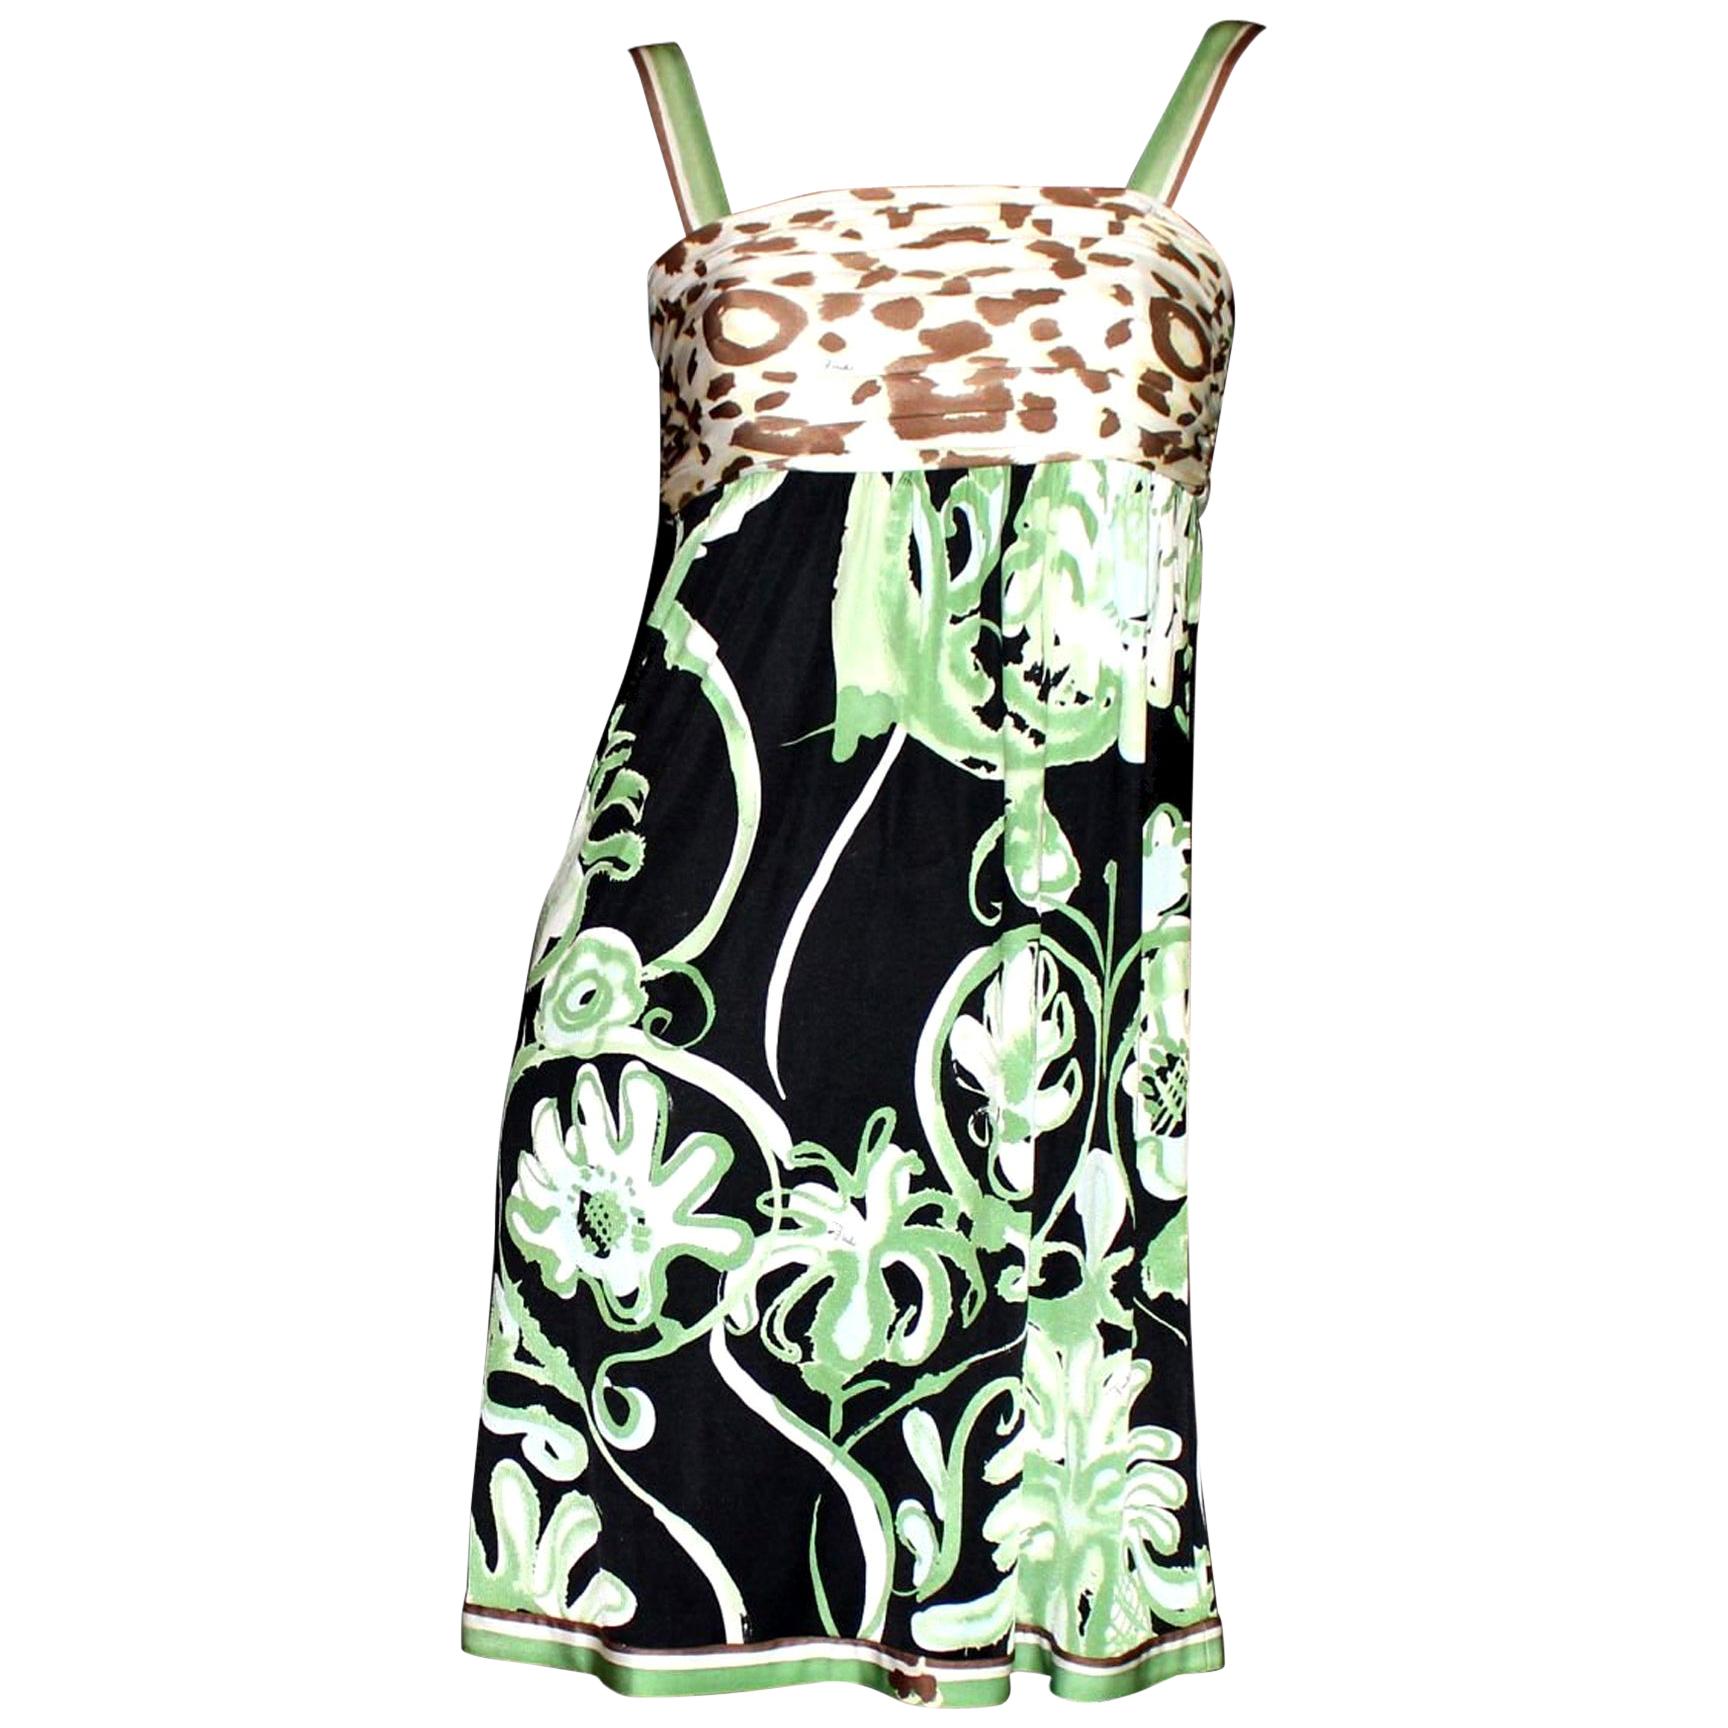 Emilio Pucci Silk Jersey Jungle Cheetah Animal Floral Botanical Print Dress 2